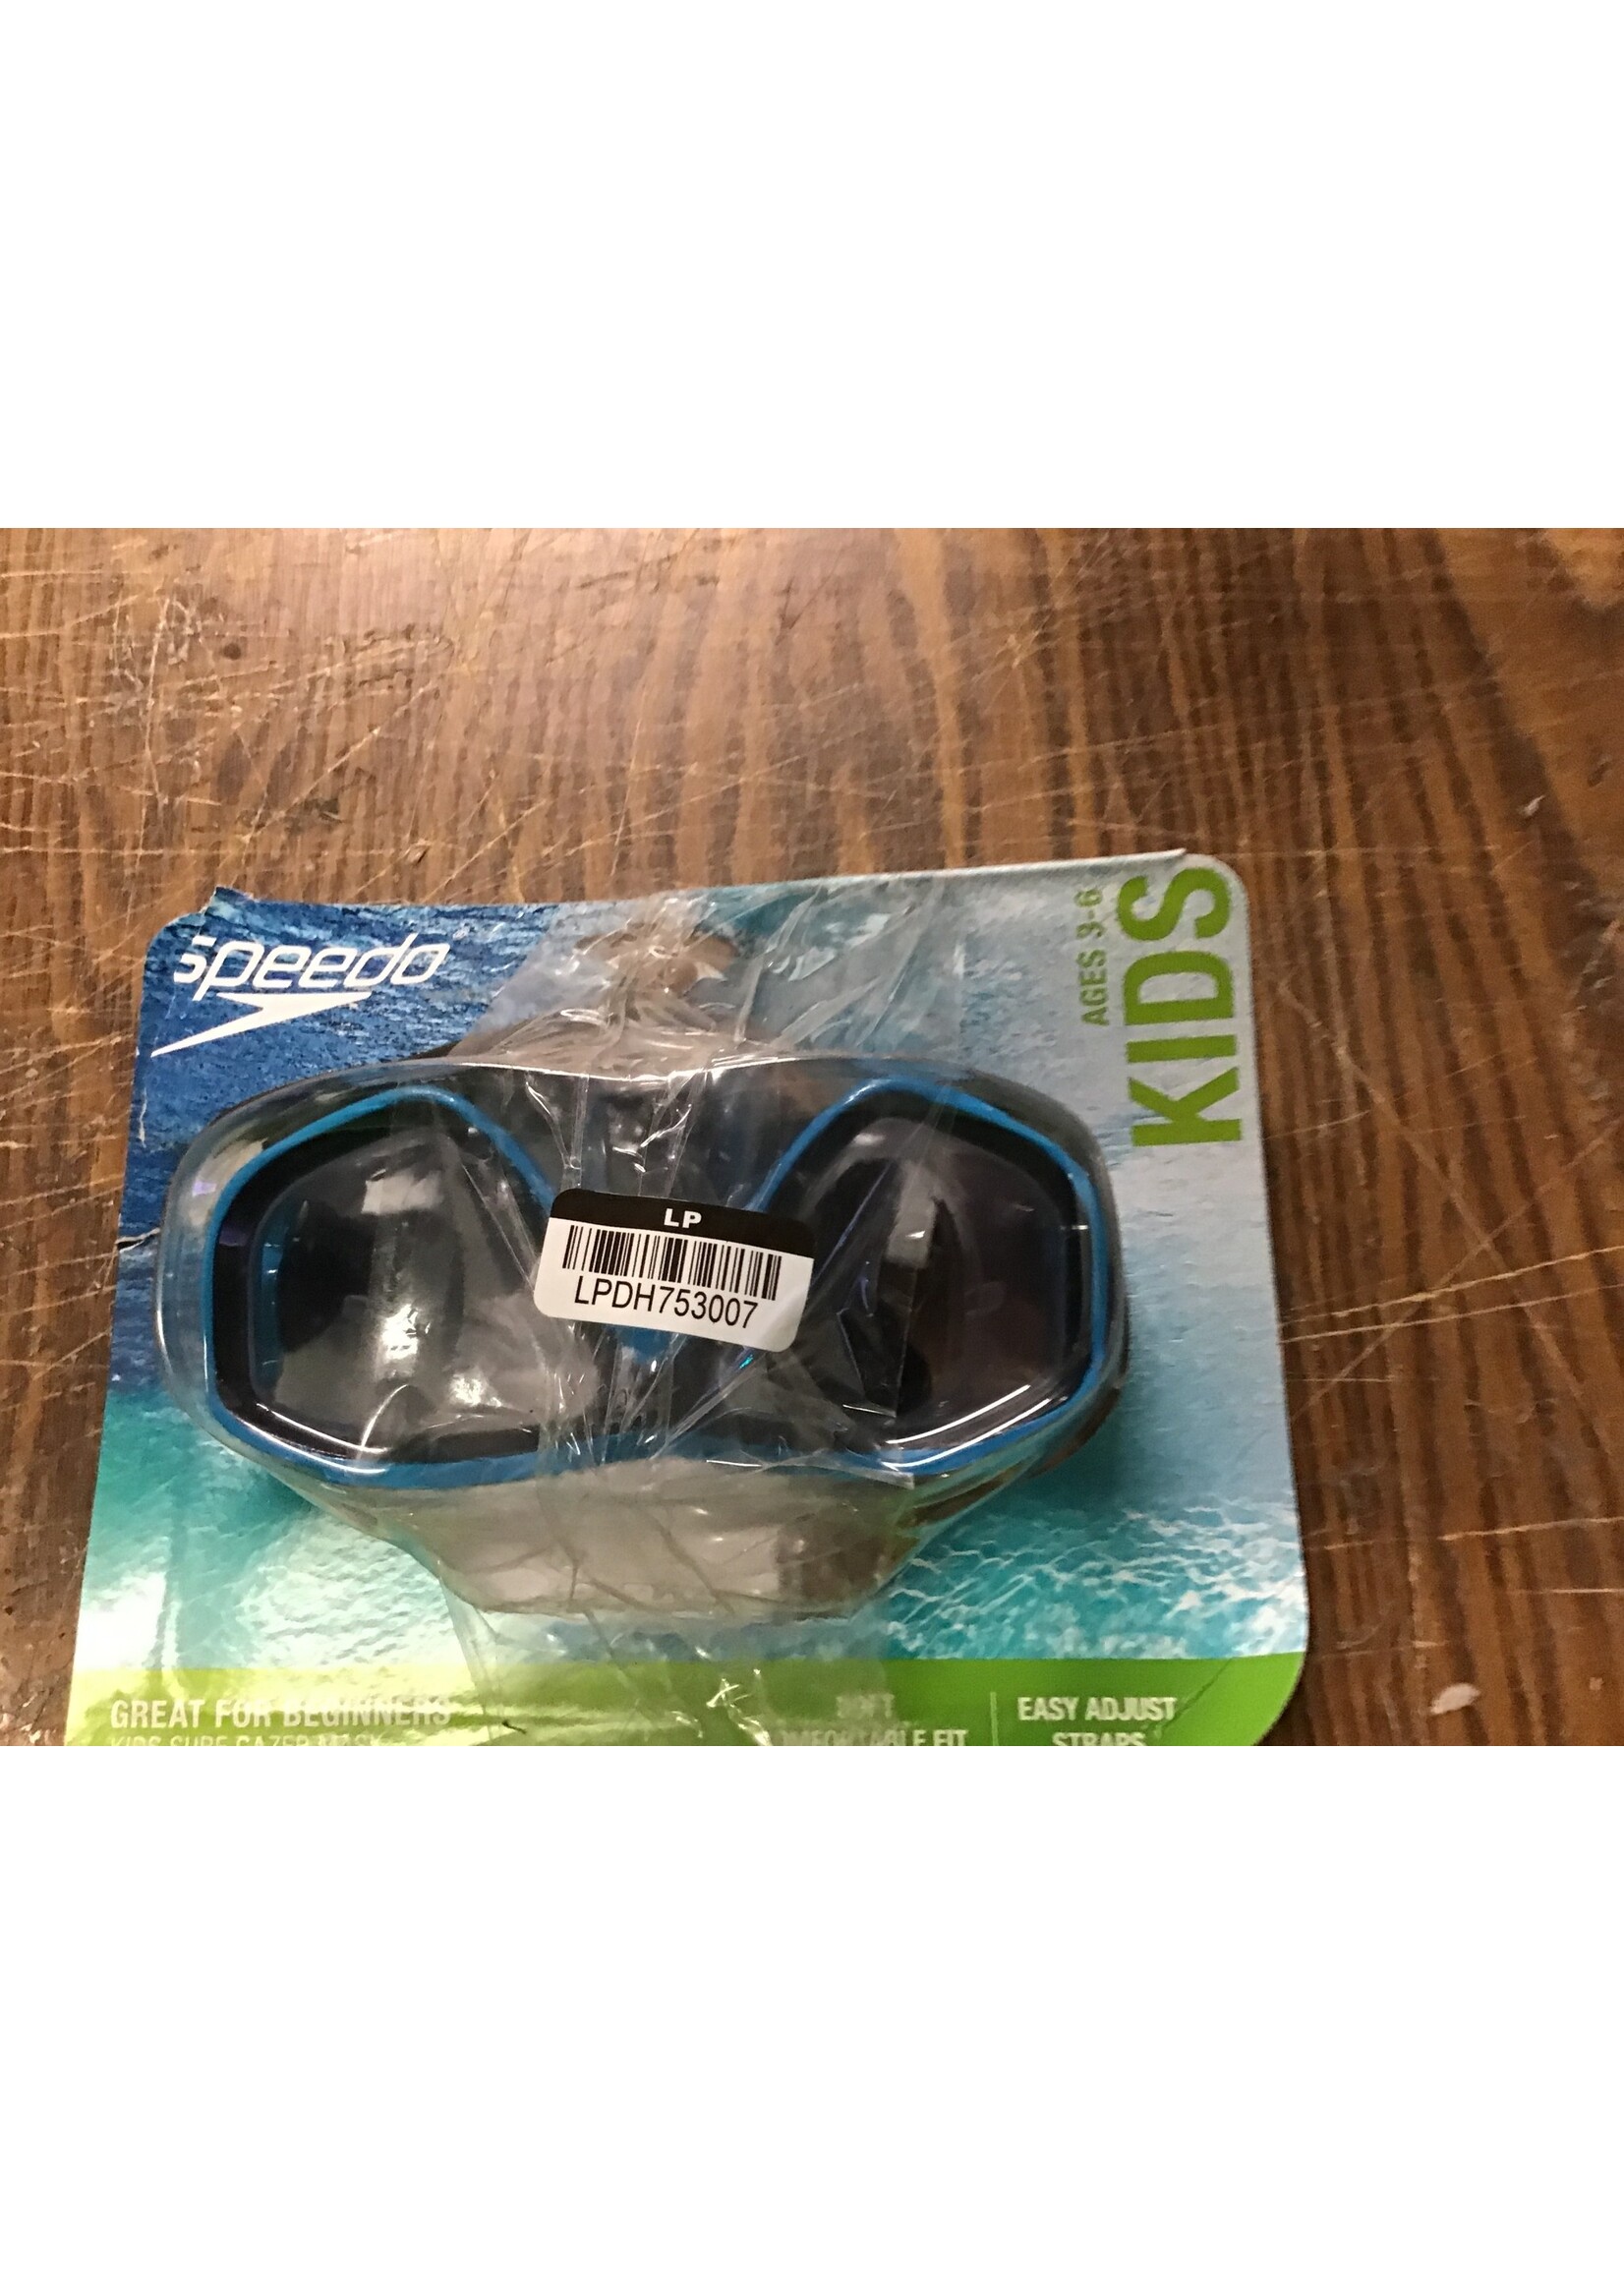 *open packaging* Speedo Kids' Surf Gazer Swim Mask - Cyber Turquoise